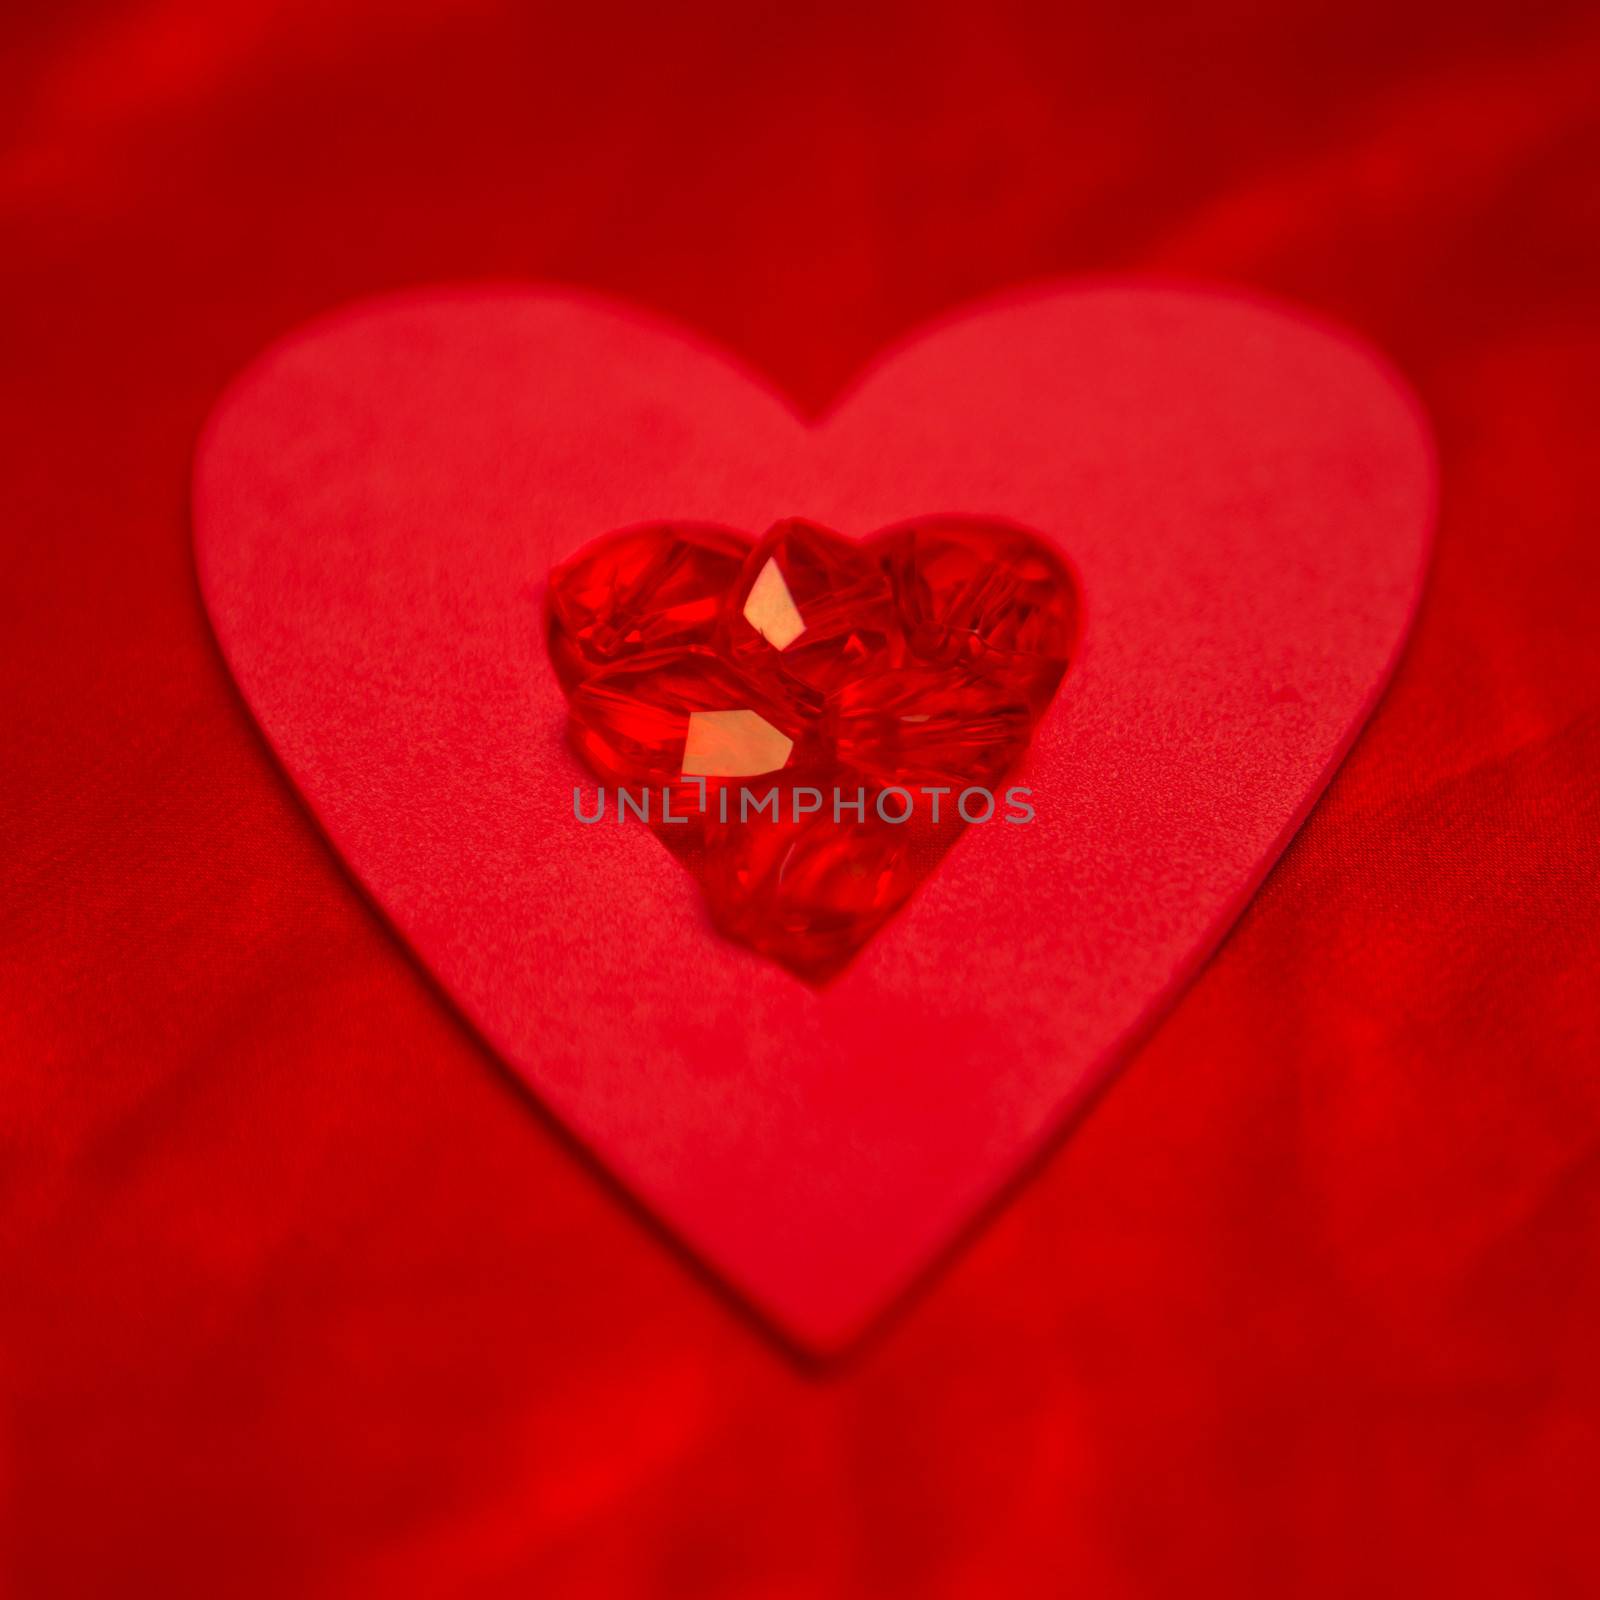 Rubies resting on red heart by Wavebreakmedia